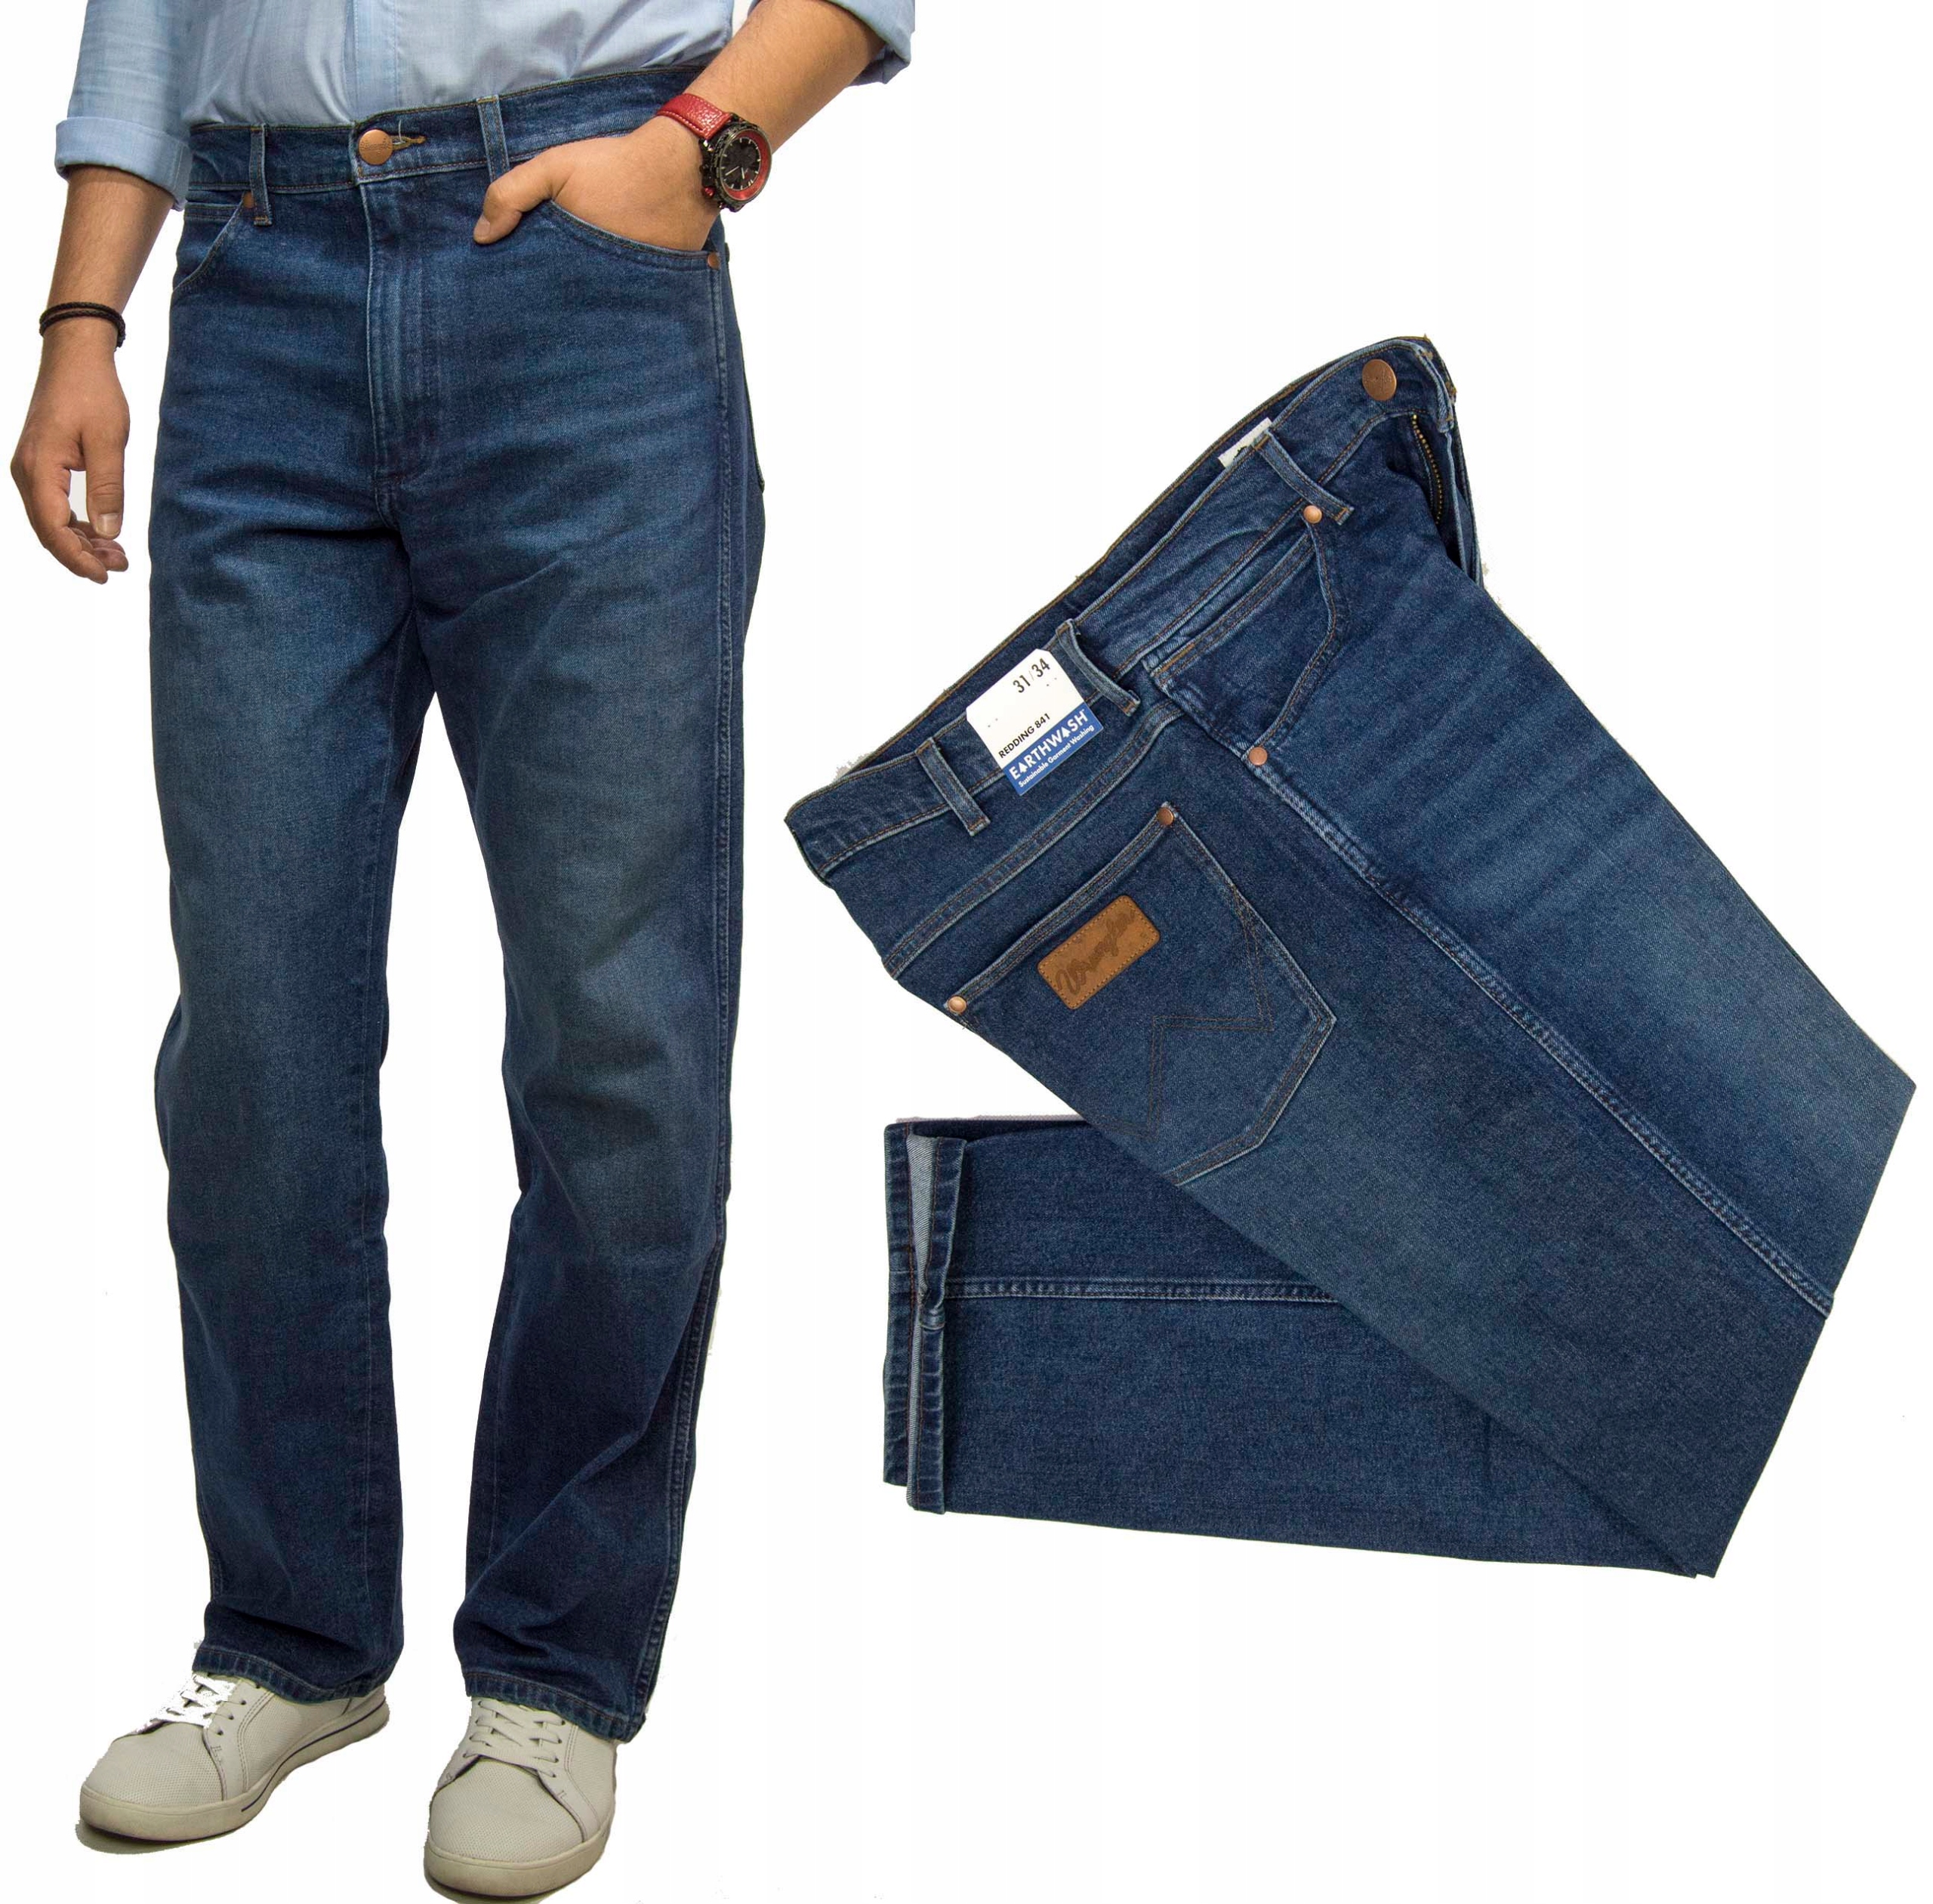 Wrangler Redding Arcade spodnie jeansy W34 L32 12706691935 